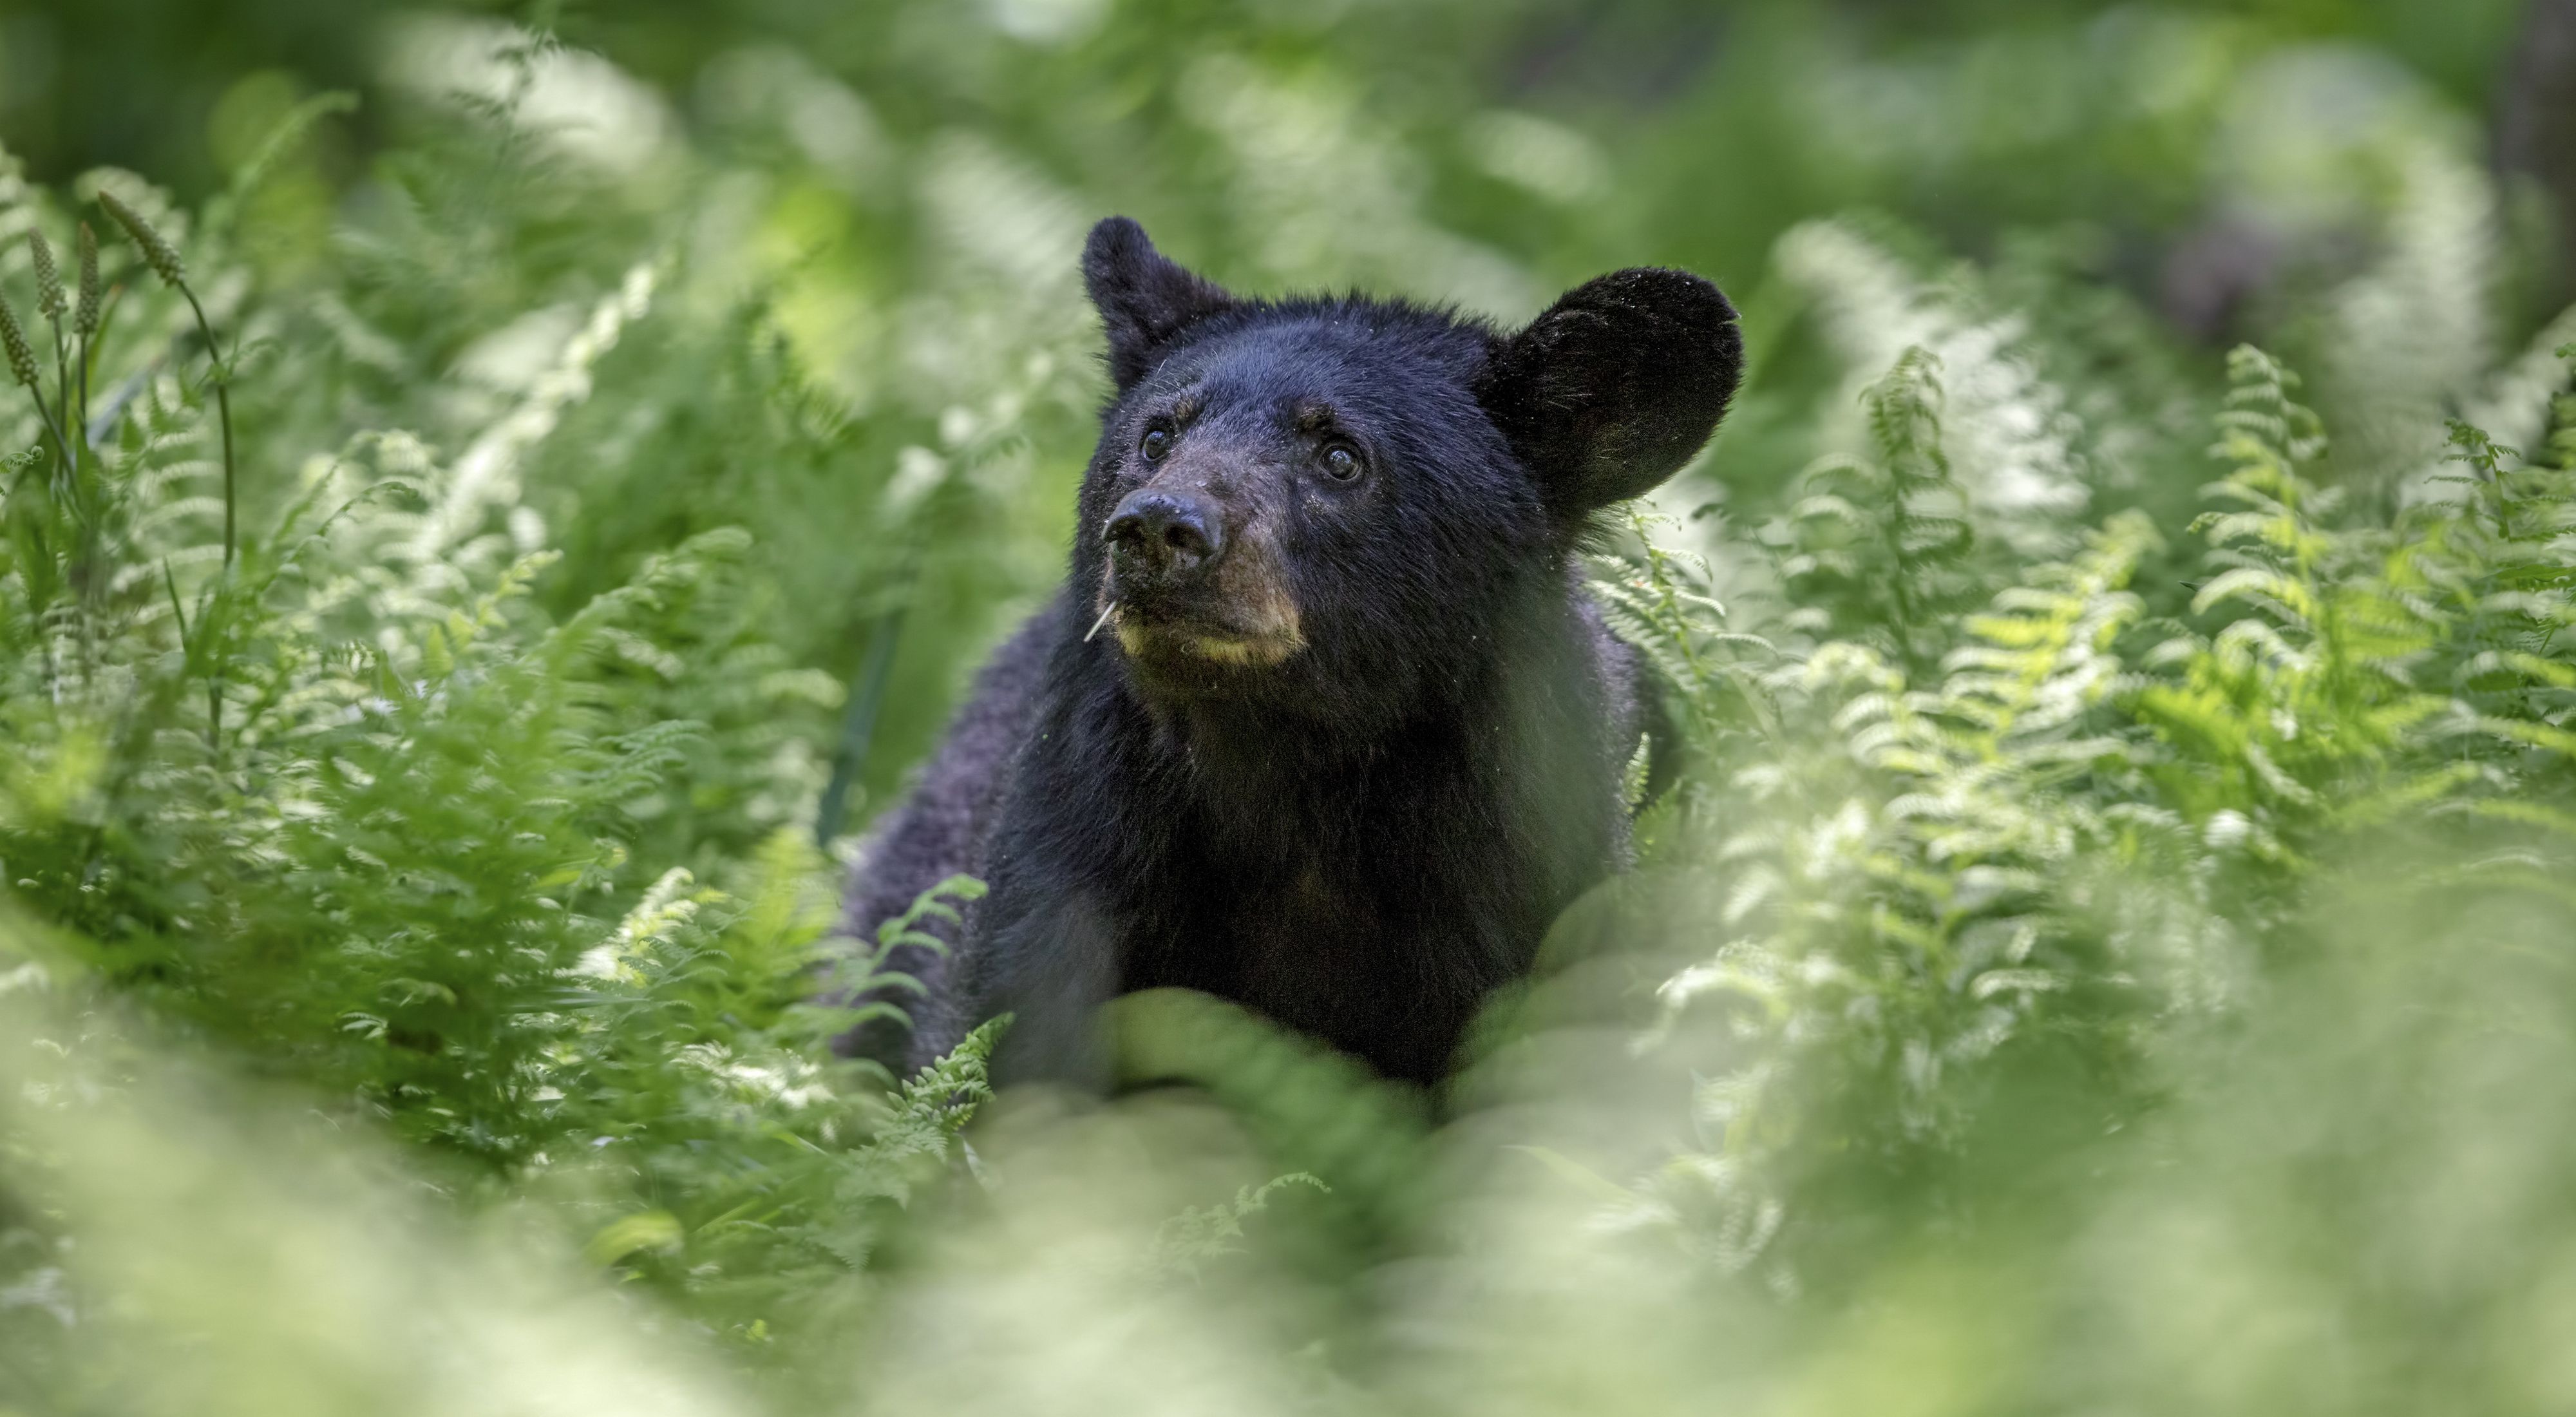 Photo of a black bear yearling among ferns.